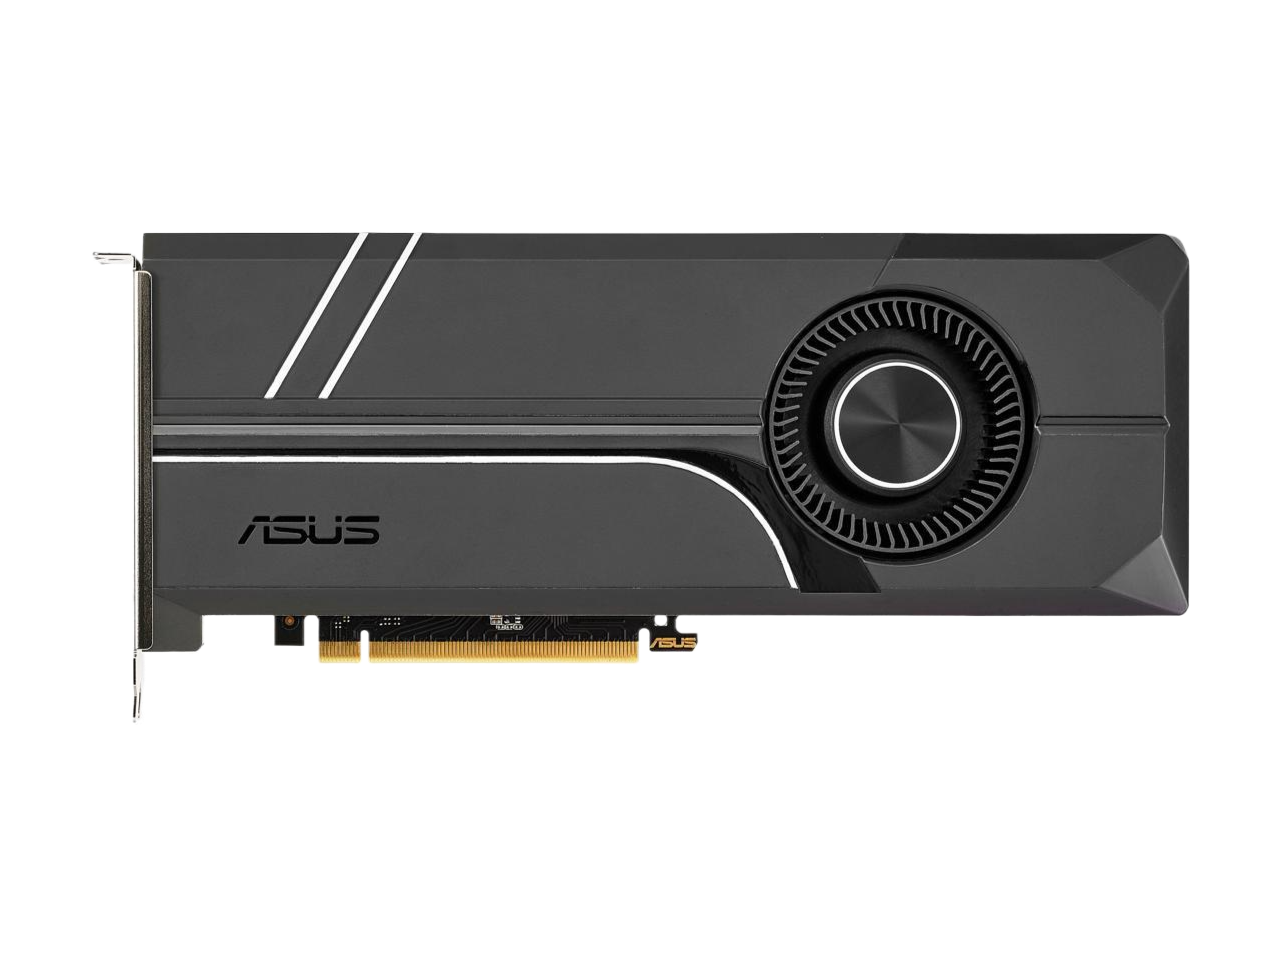 ASUS GeForce GTX 1080 Ti 11GB Turbo Edition VR Ready 5K Gaming HDMI Graphics Card TURBO-GTX1080TI-11G